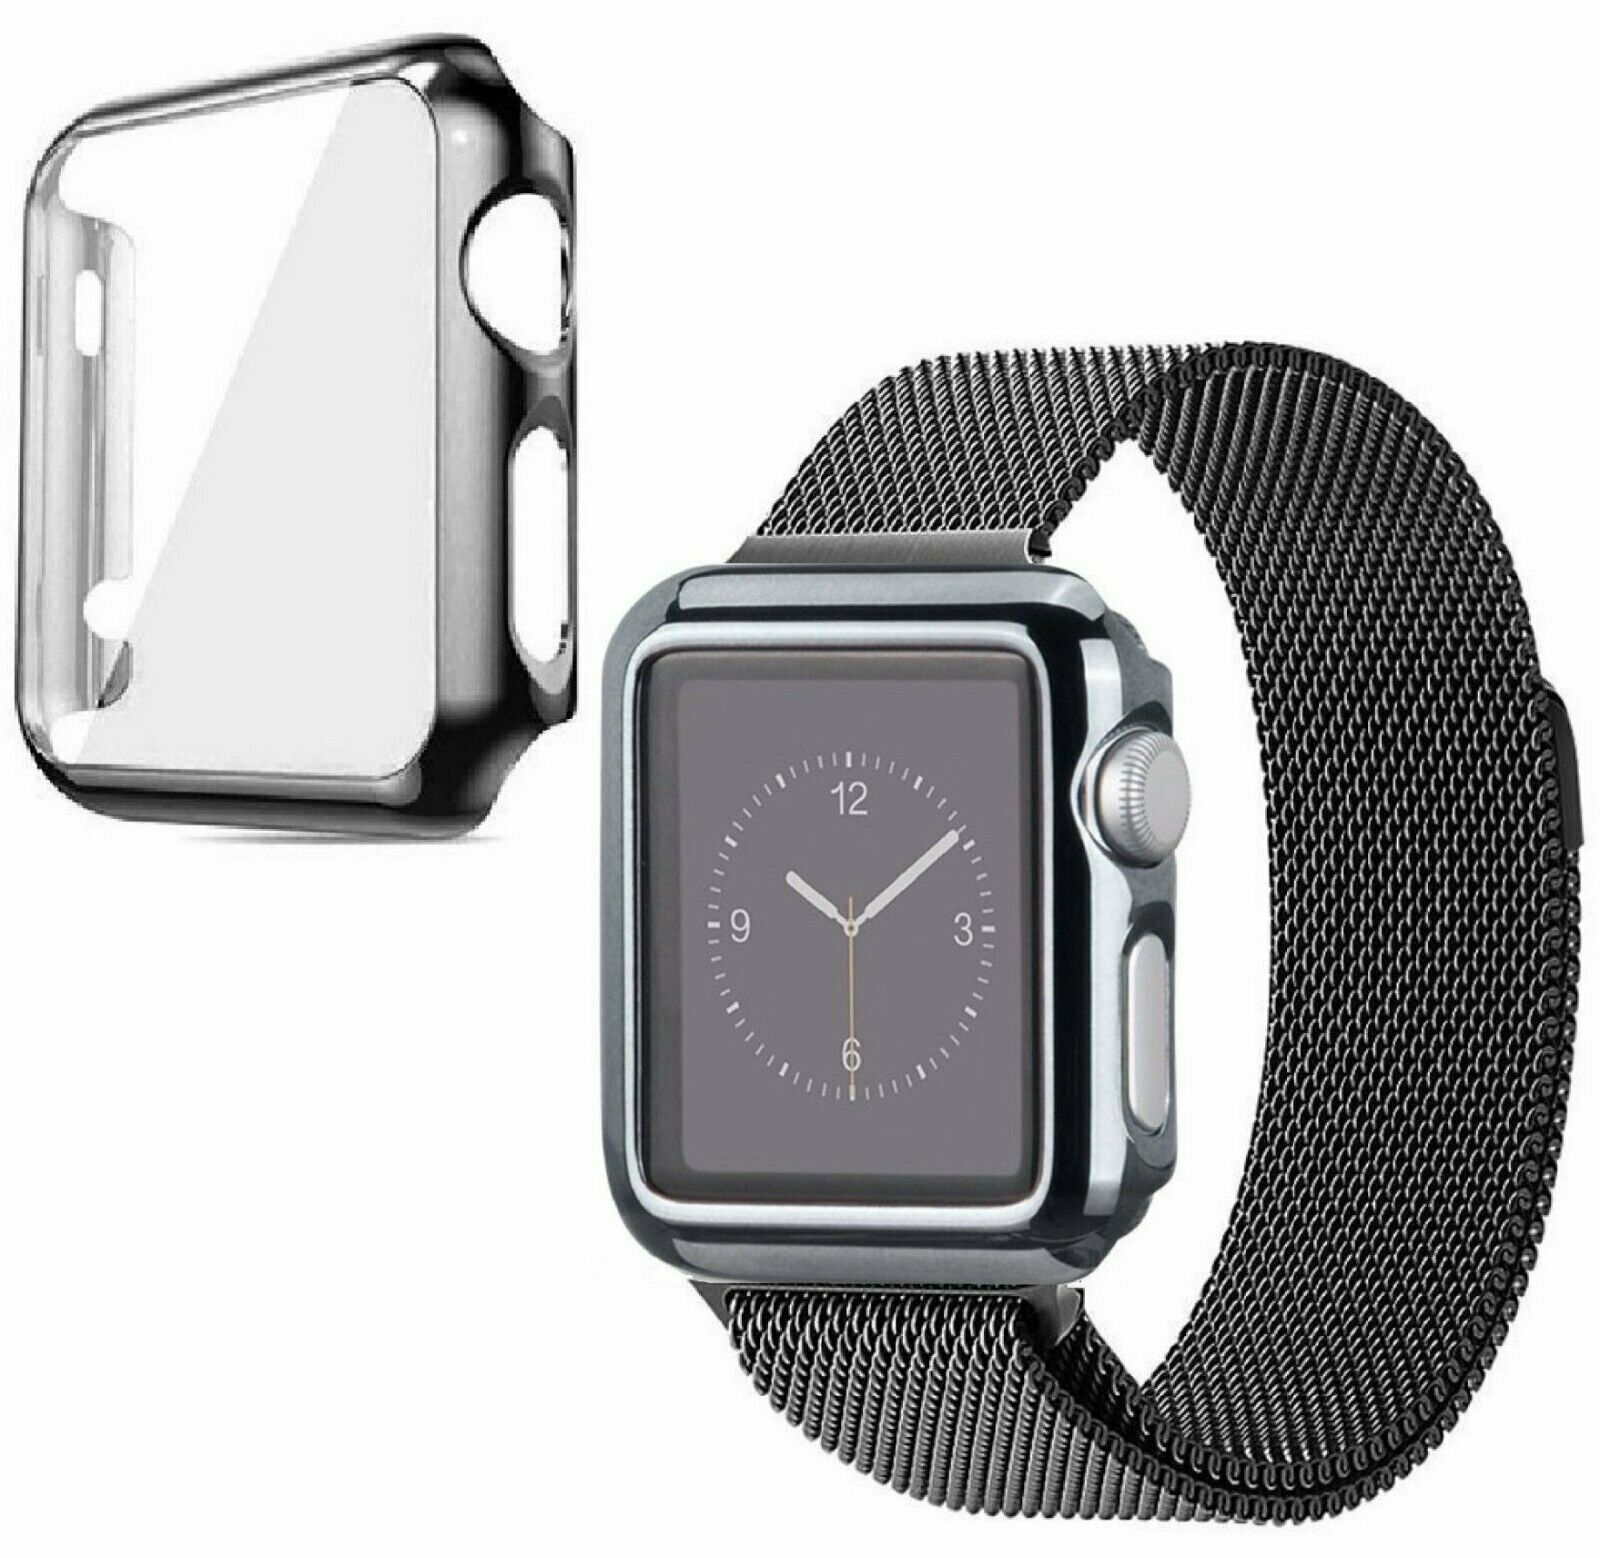 Apple Watch 2 3 4 38 42MM 40 44MM Full Cover Snap On Case Screen Protector lilyann76lilyann76 